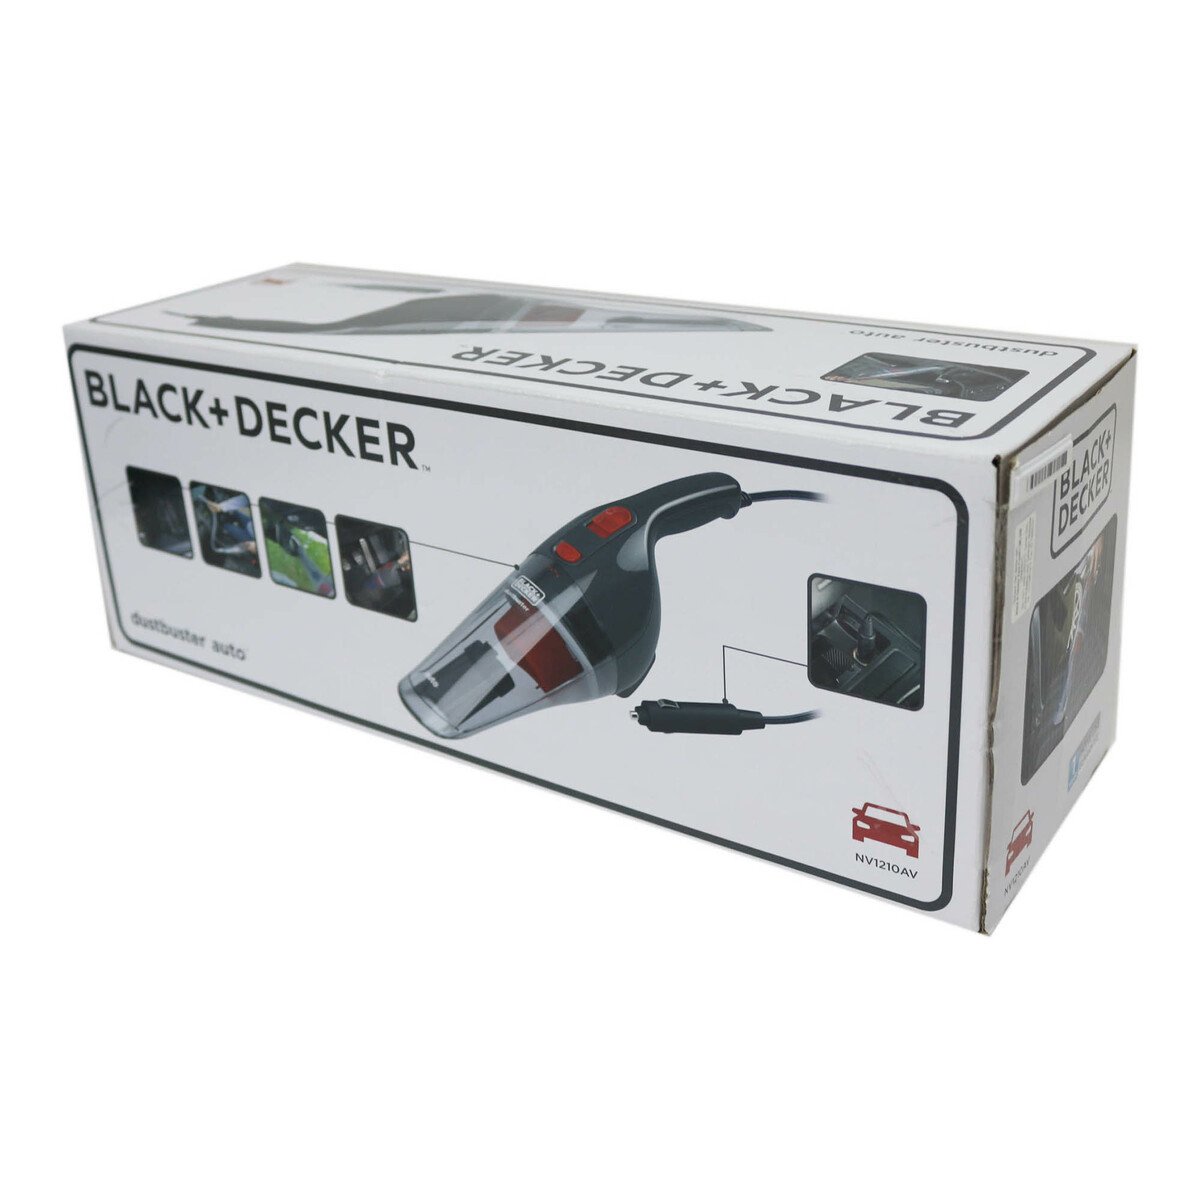 Black&Decker Auto Dust Buster 12Vdc